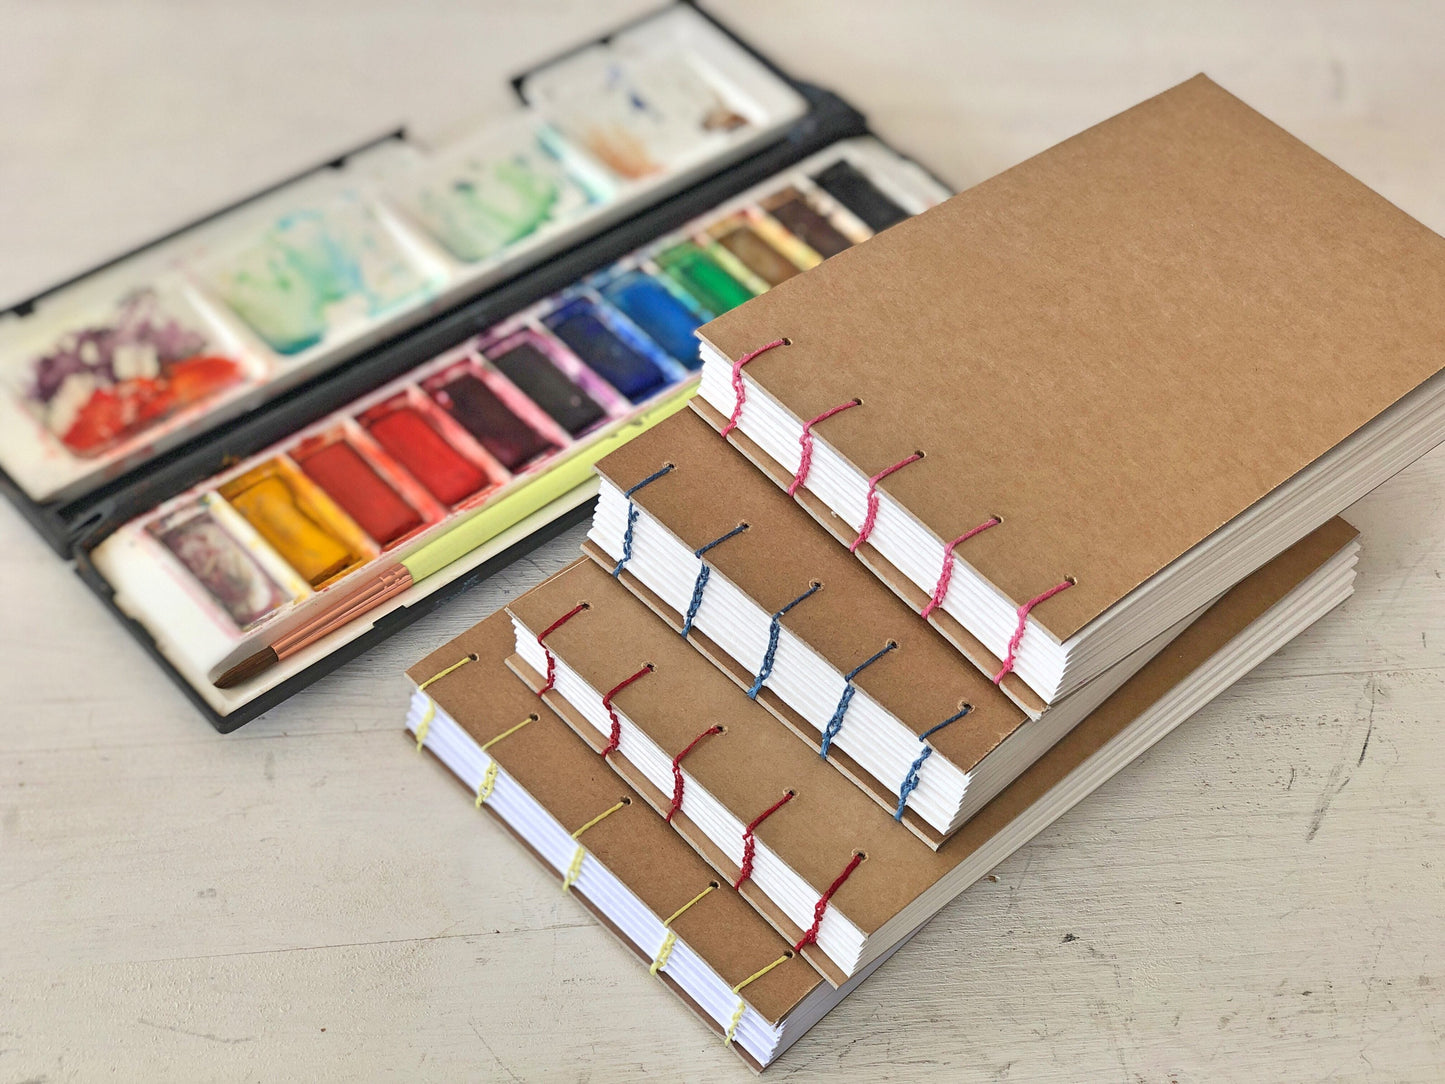 Pocket Watercolor Journals with 140lb Mixed Media paper, Hardcover Open Flat Coptic Landscape Sketchbooks, Gift for Artist, Urban Sketcher